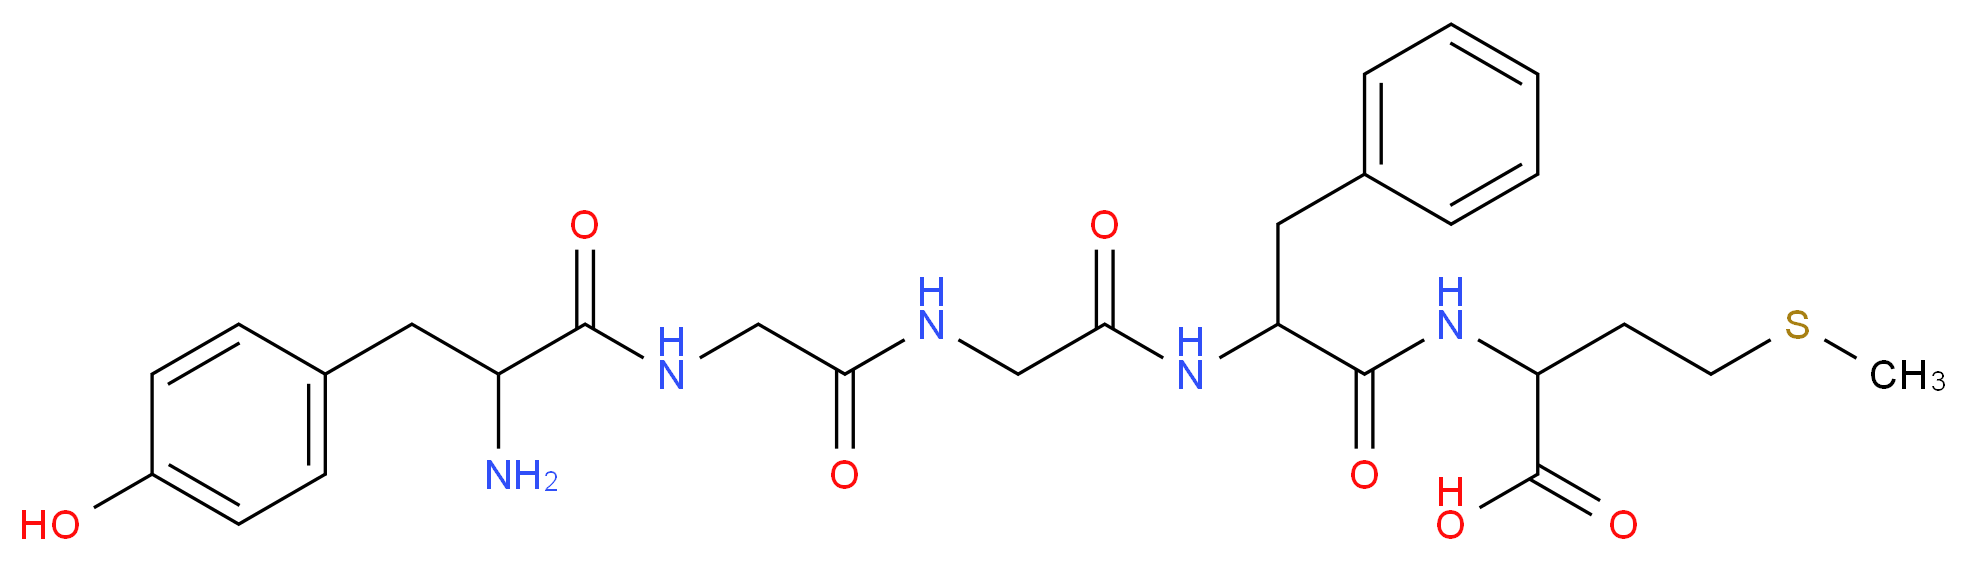 Met-enkephalin_Molecular_structure_CAS_58569-55-4)